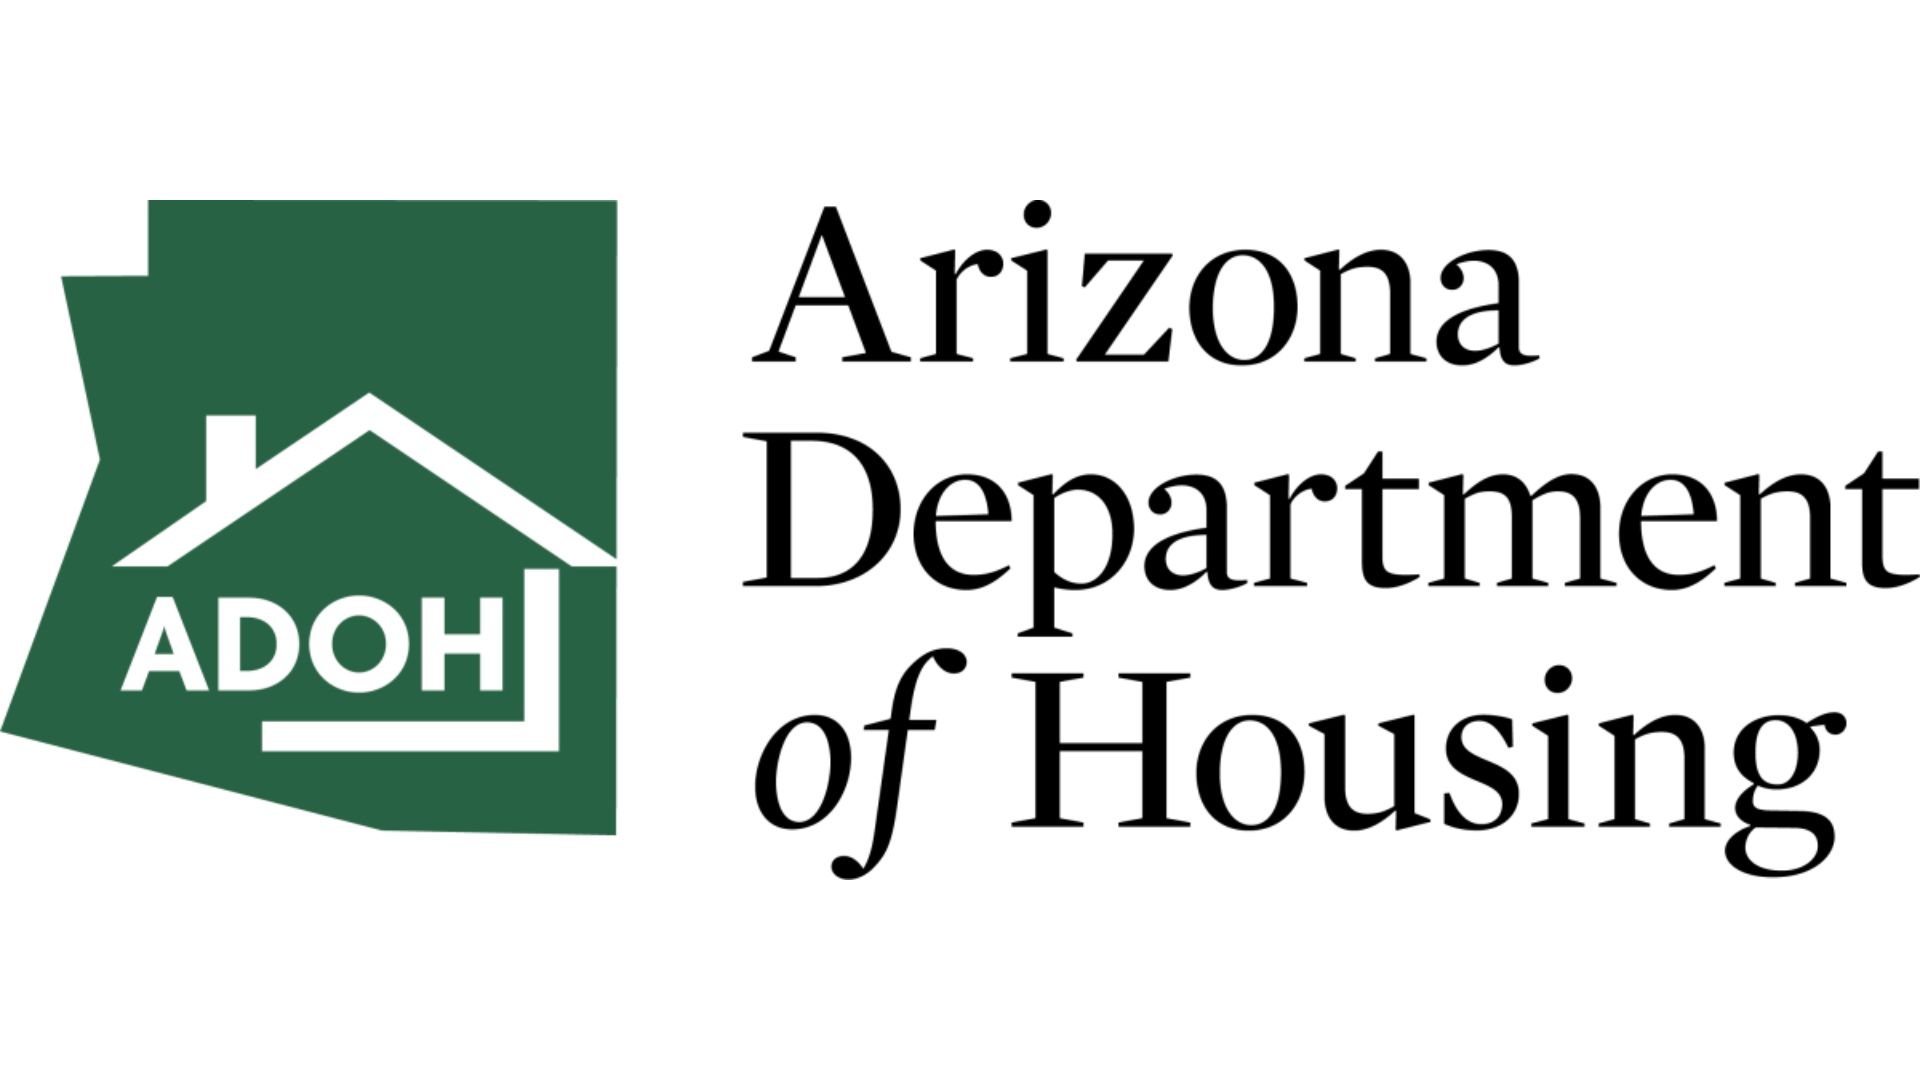 Arizona Department of Housing.